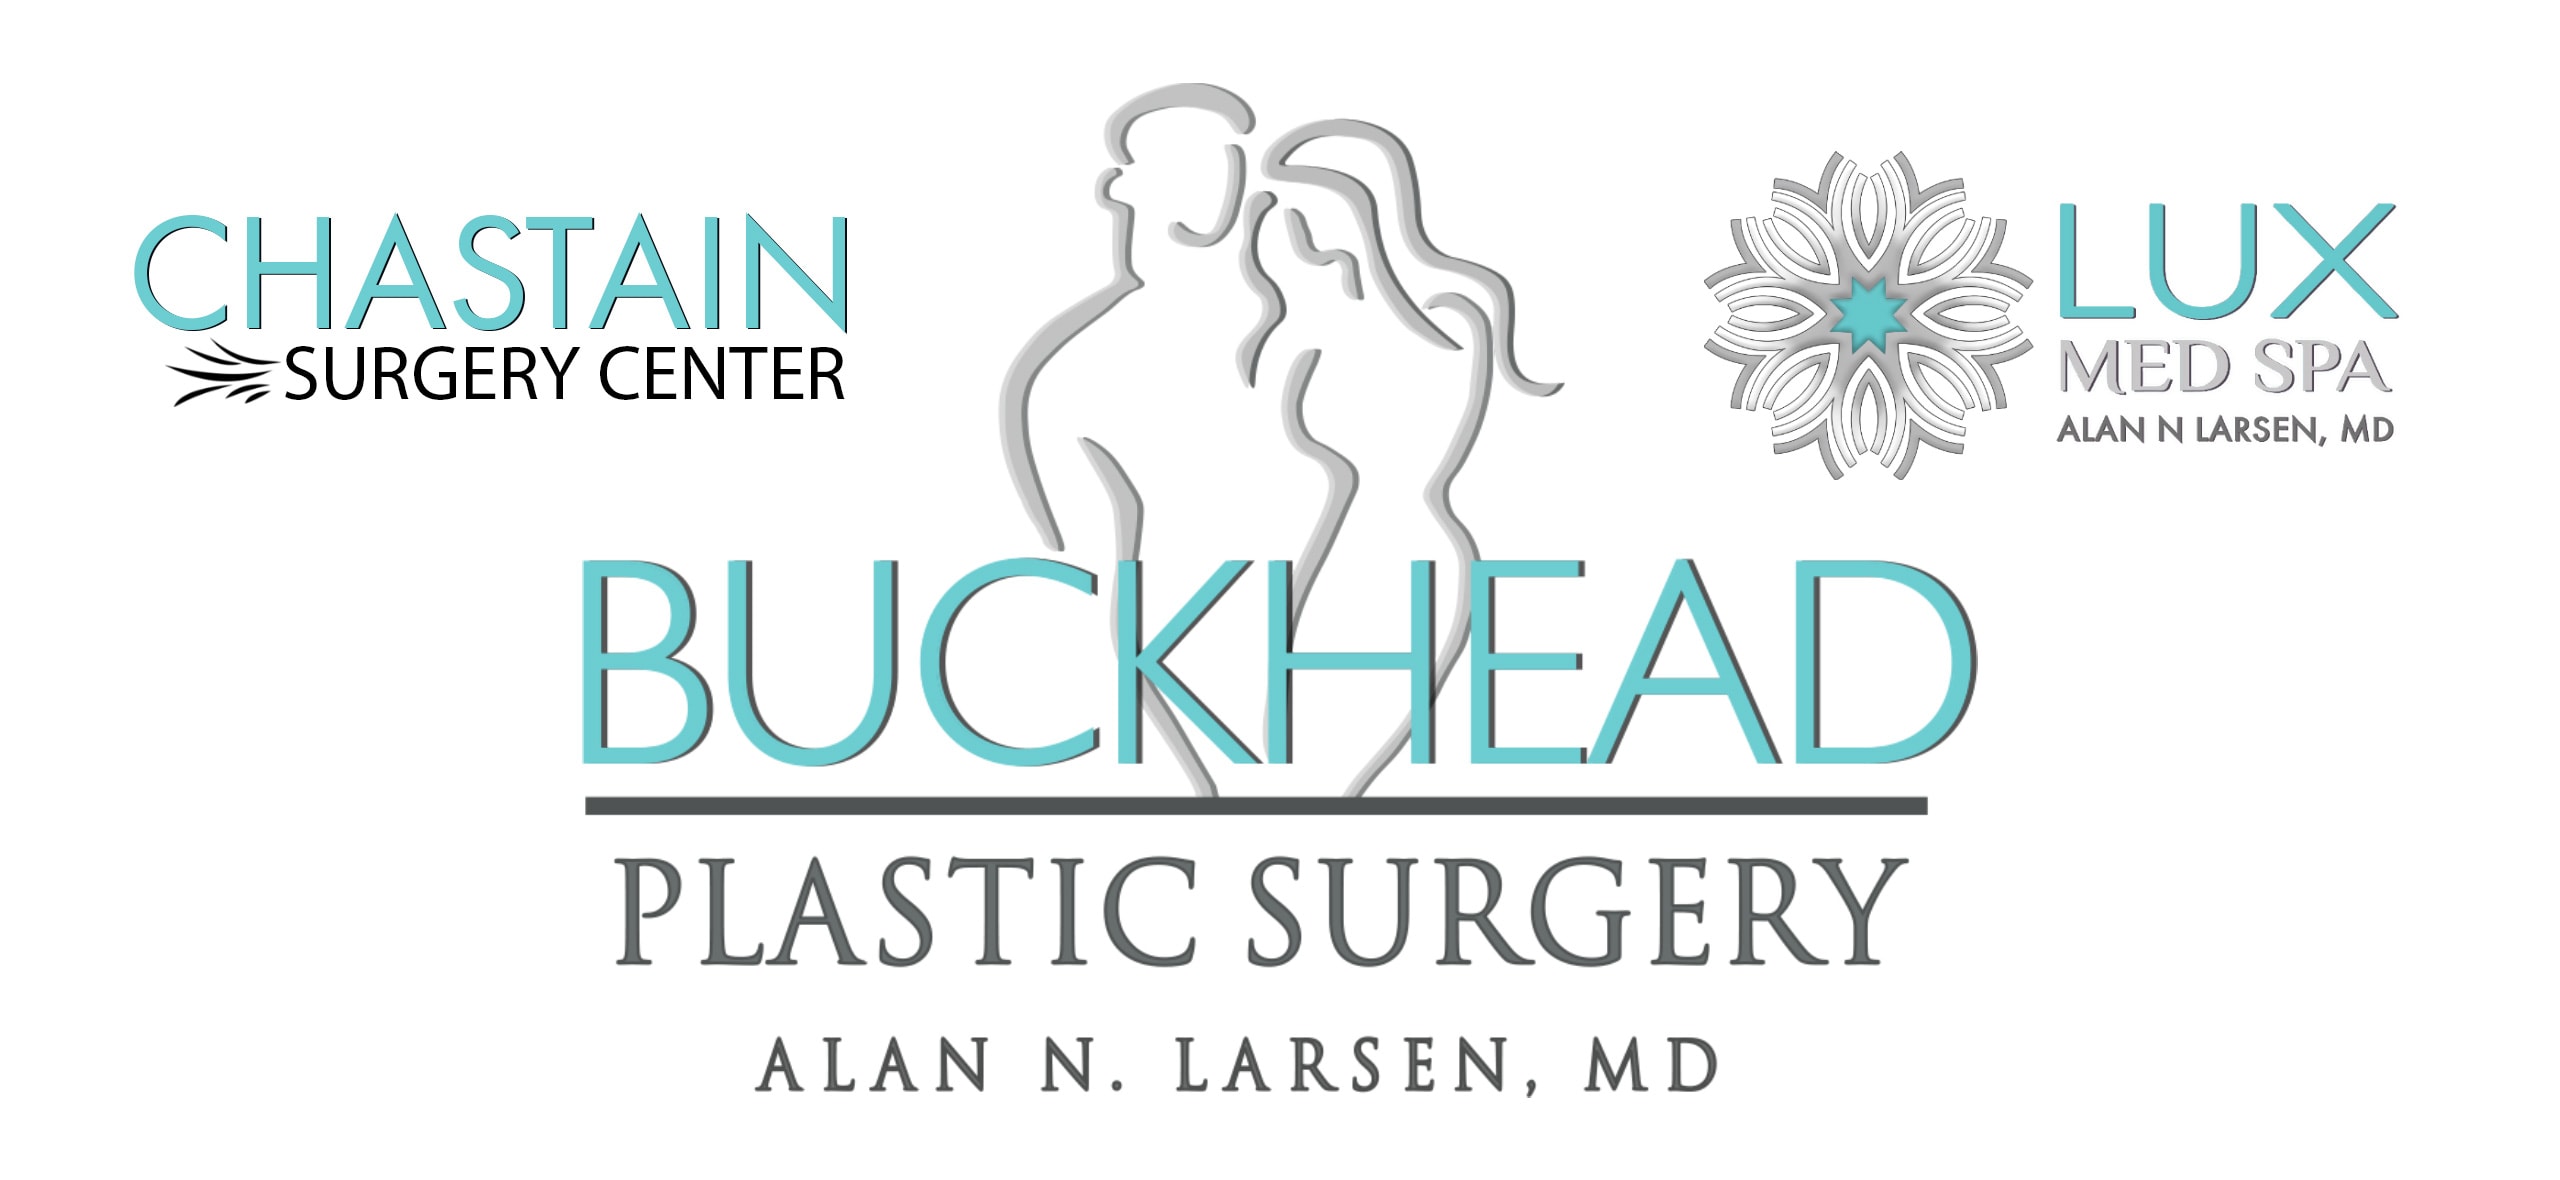 chastain surgery center buckhead atlanta, GA buckhead plastic surgery lux med spa alan n larsen md